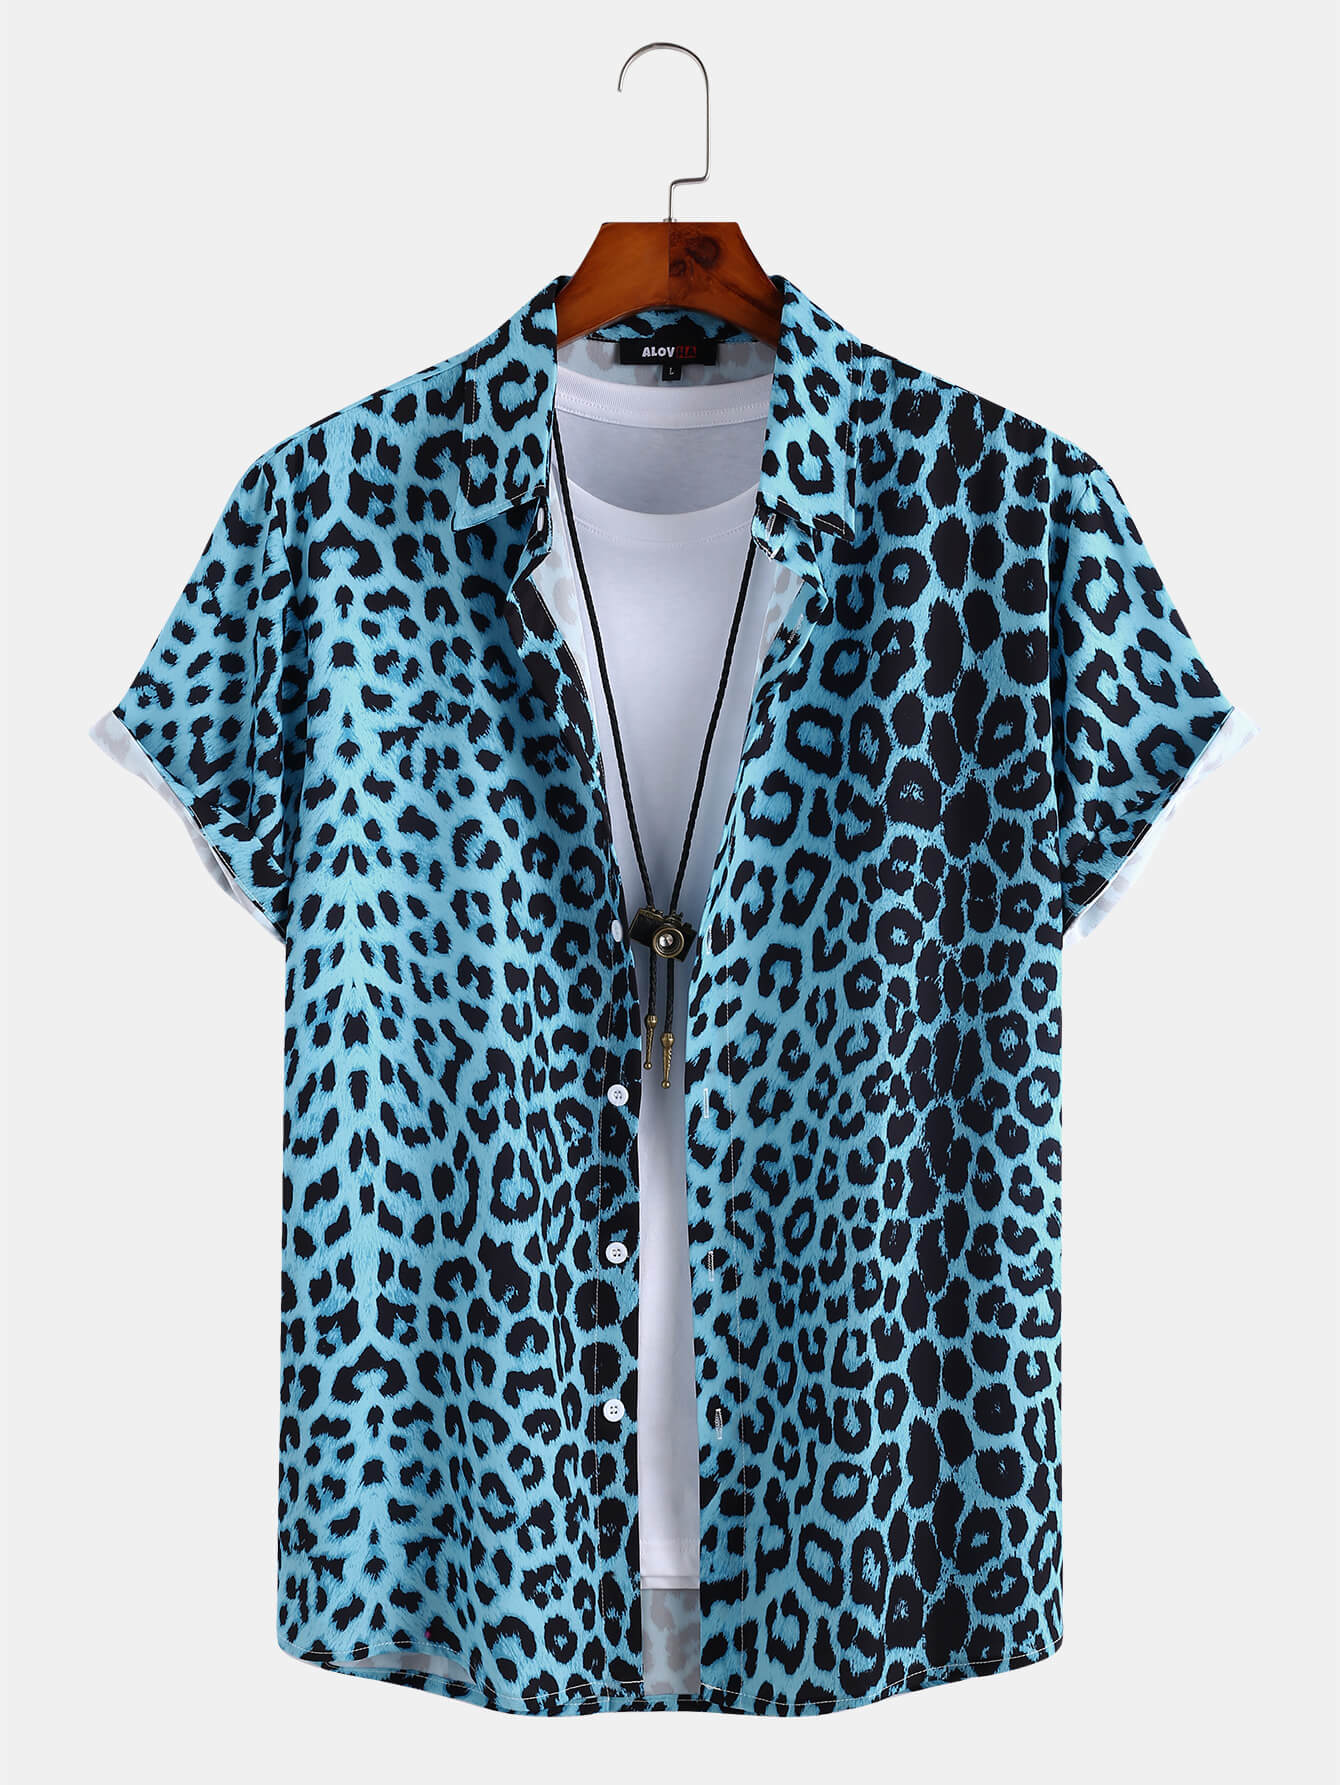 Camisa masculina manga curta com estampa de leopardo